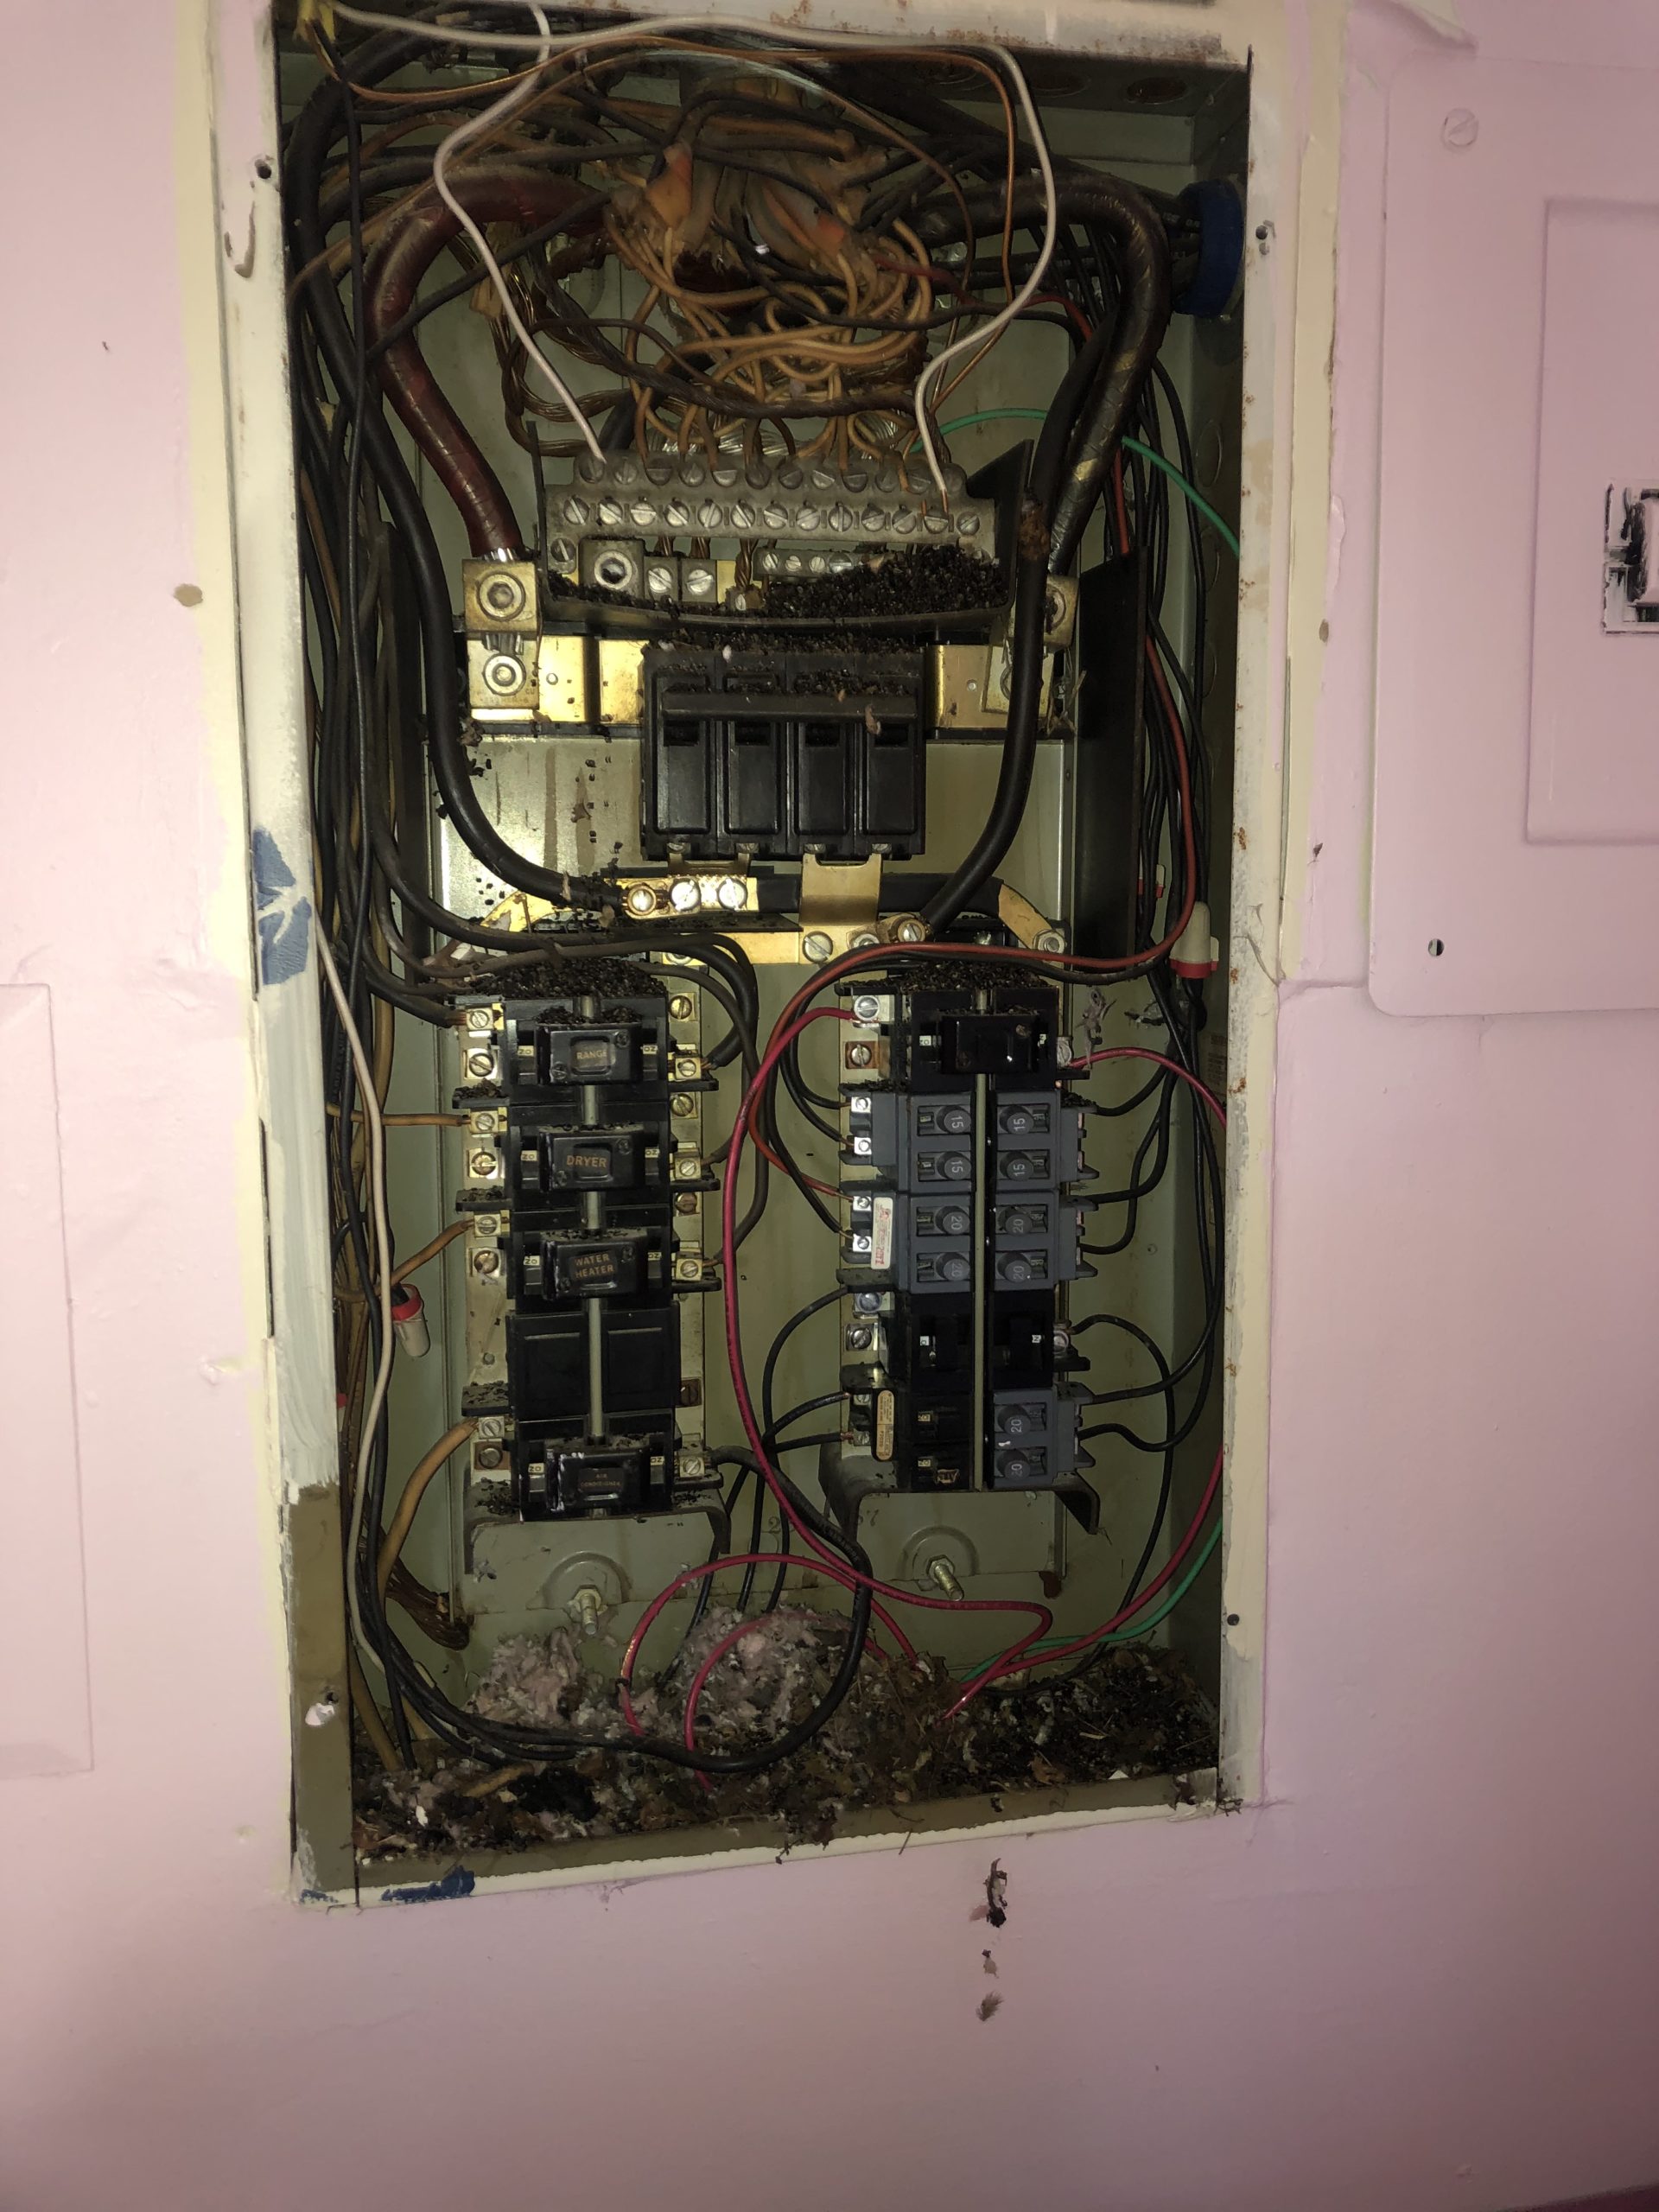 DK-electrical-solutions-electrical-repair-6332